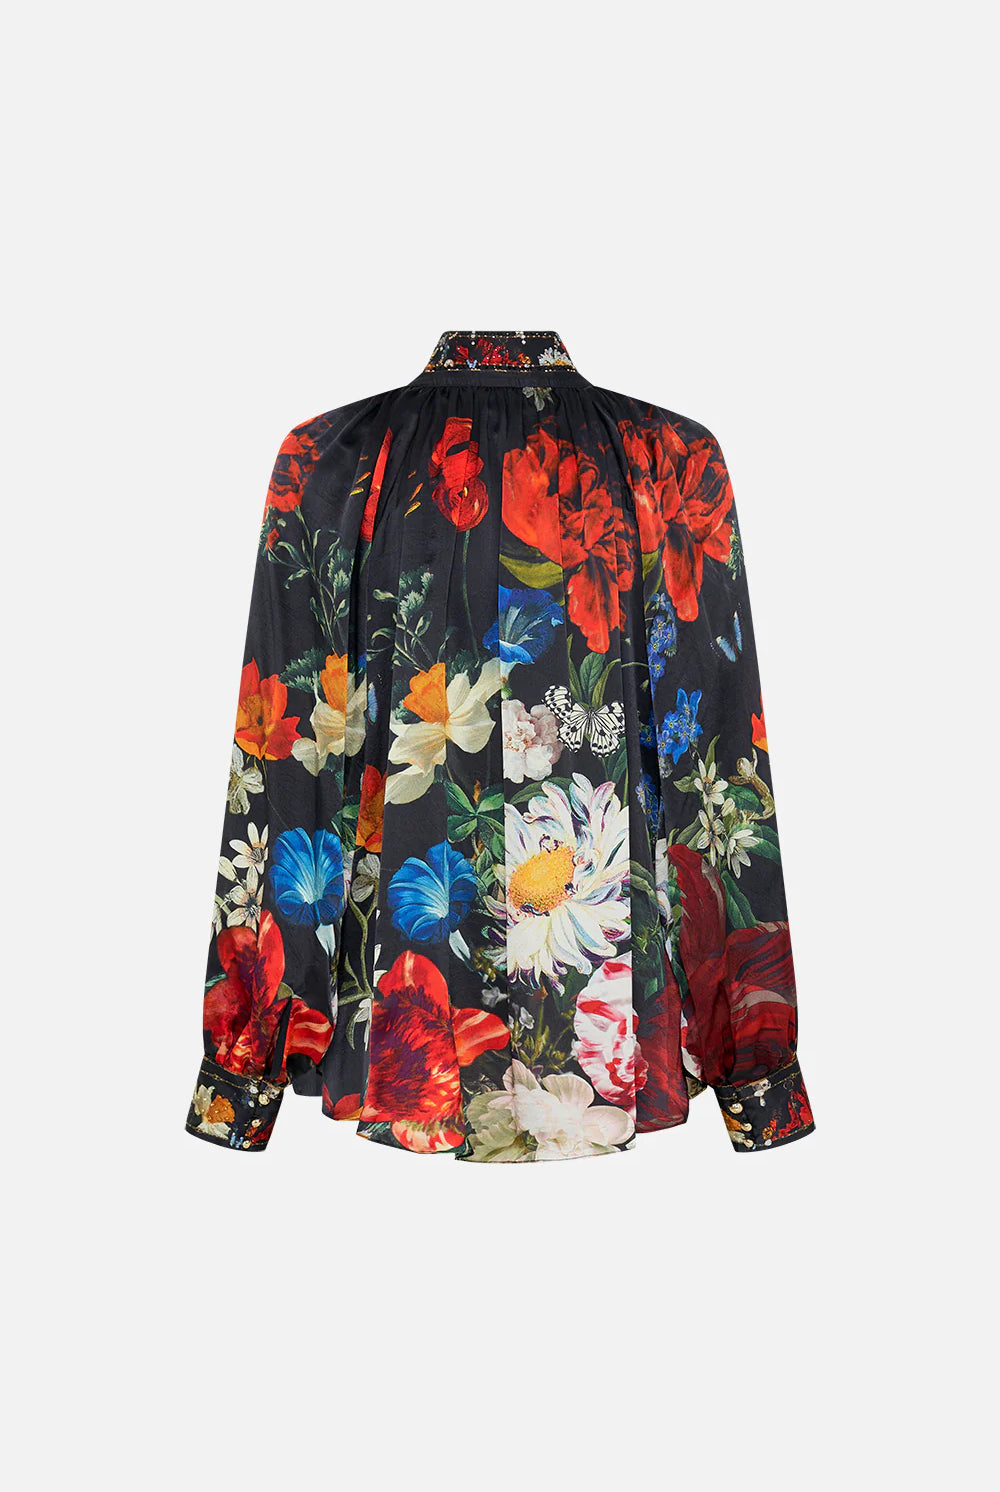 CAMILLA - Raglan Button Up Shirt A Still Life - Magpie Style